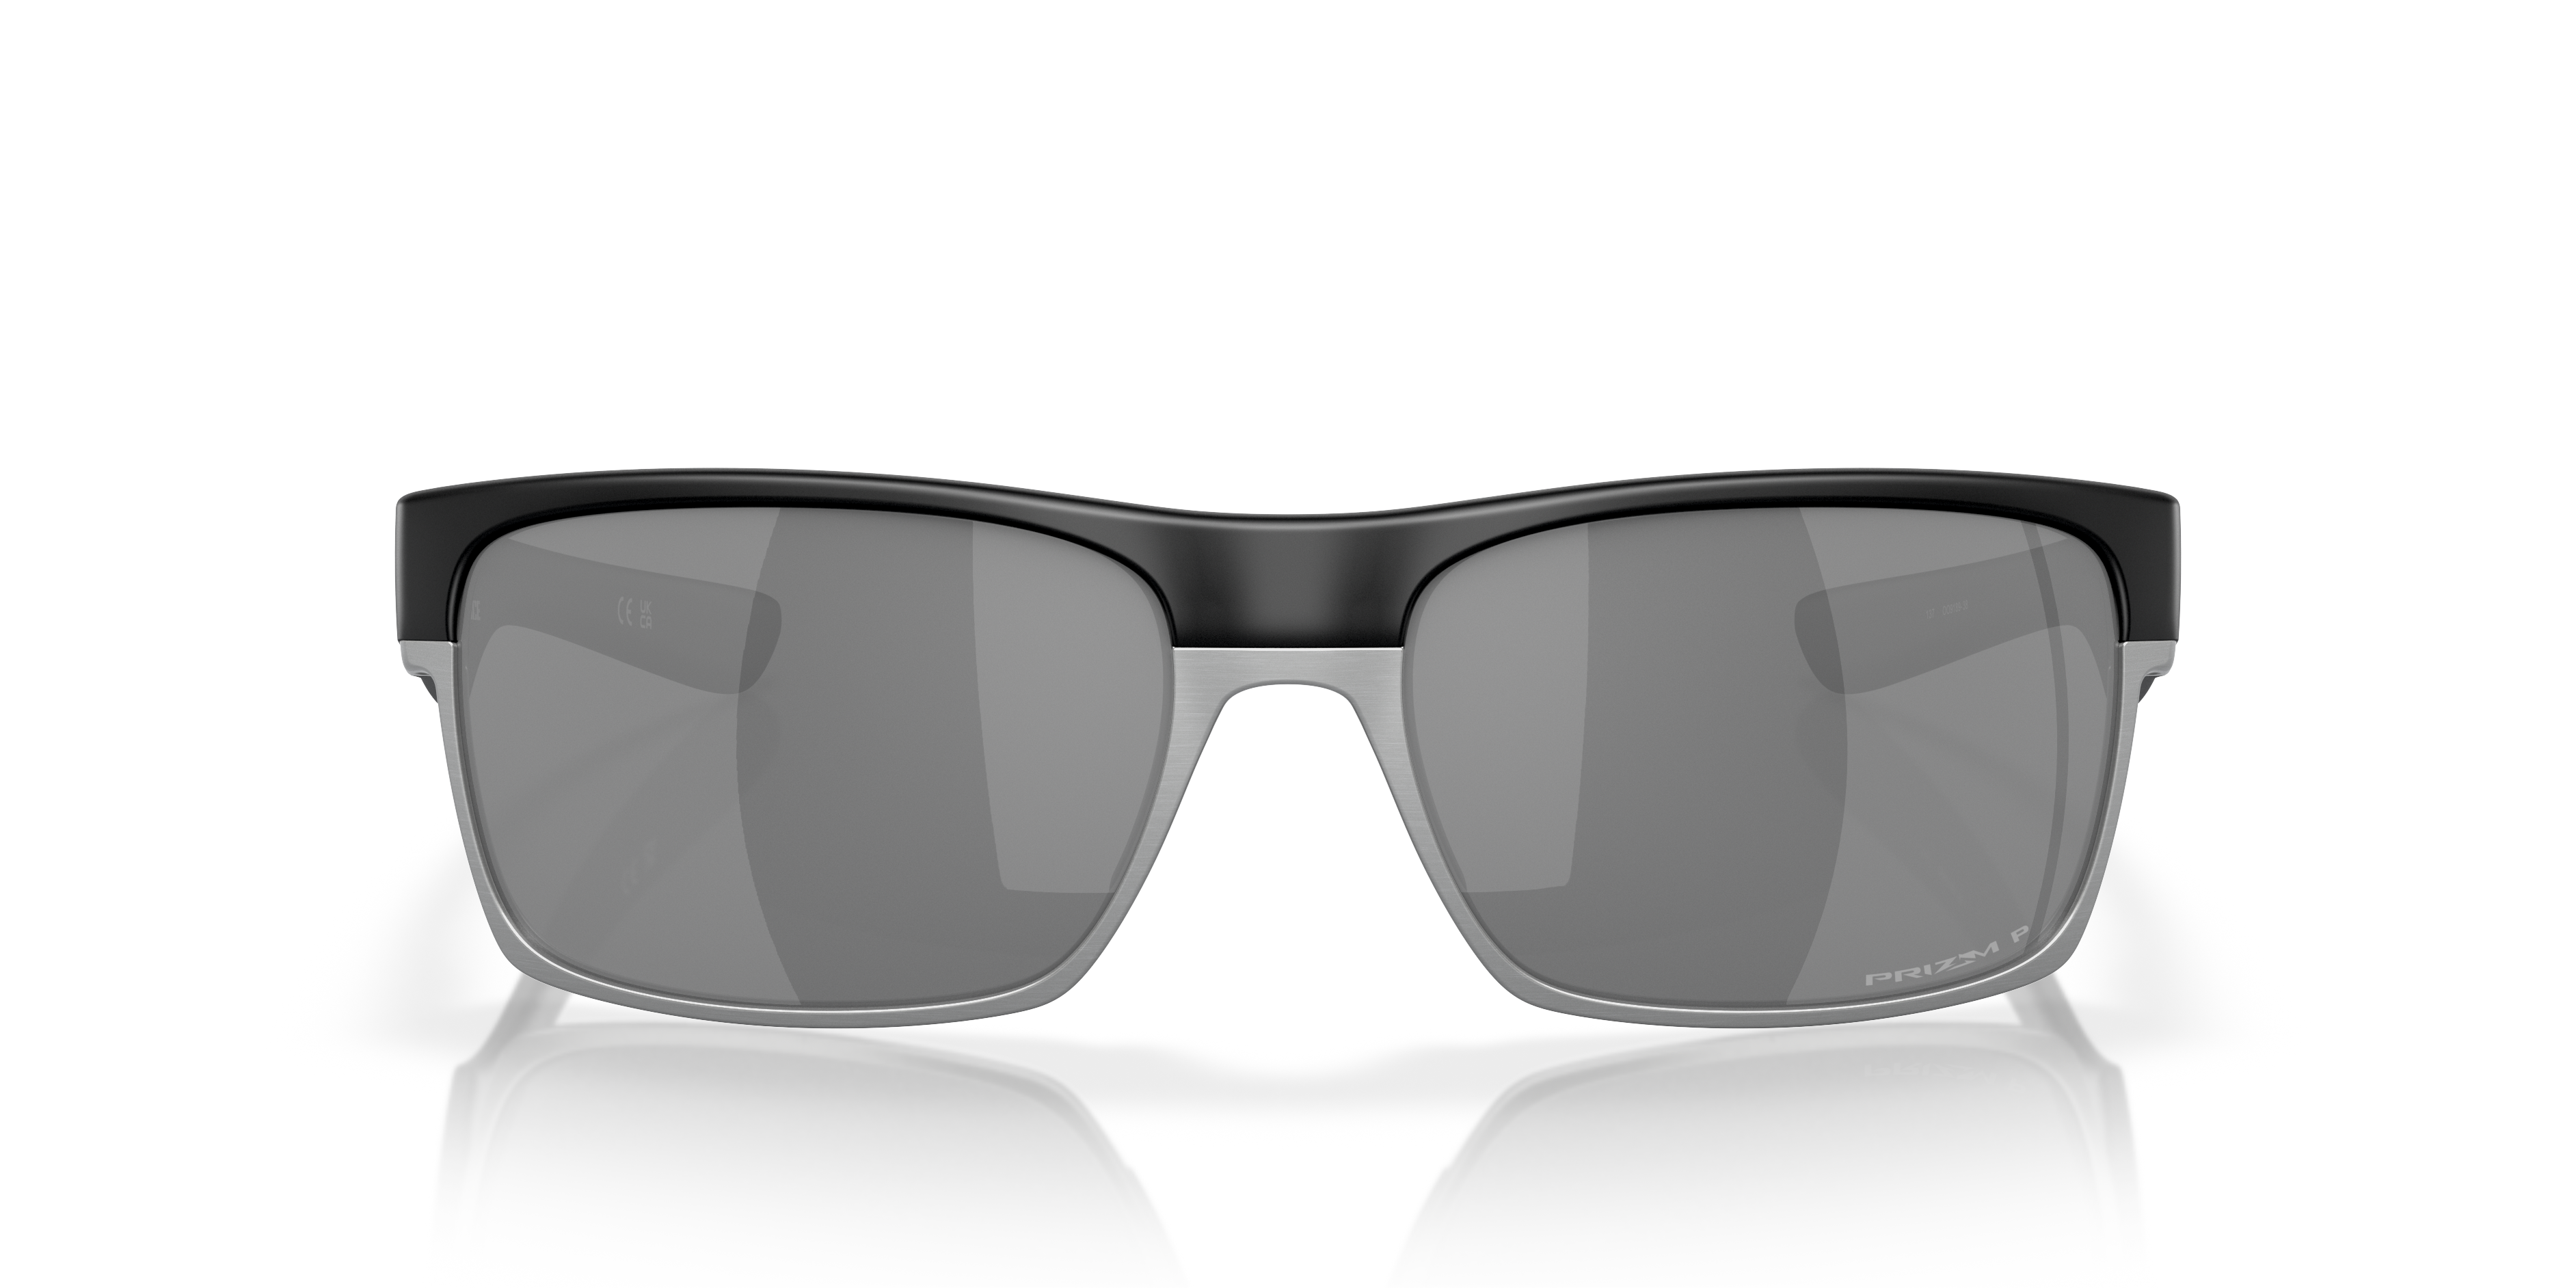 Oakley 0OO9189 Sunglasses in Black | Target Optical